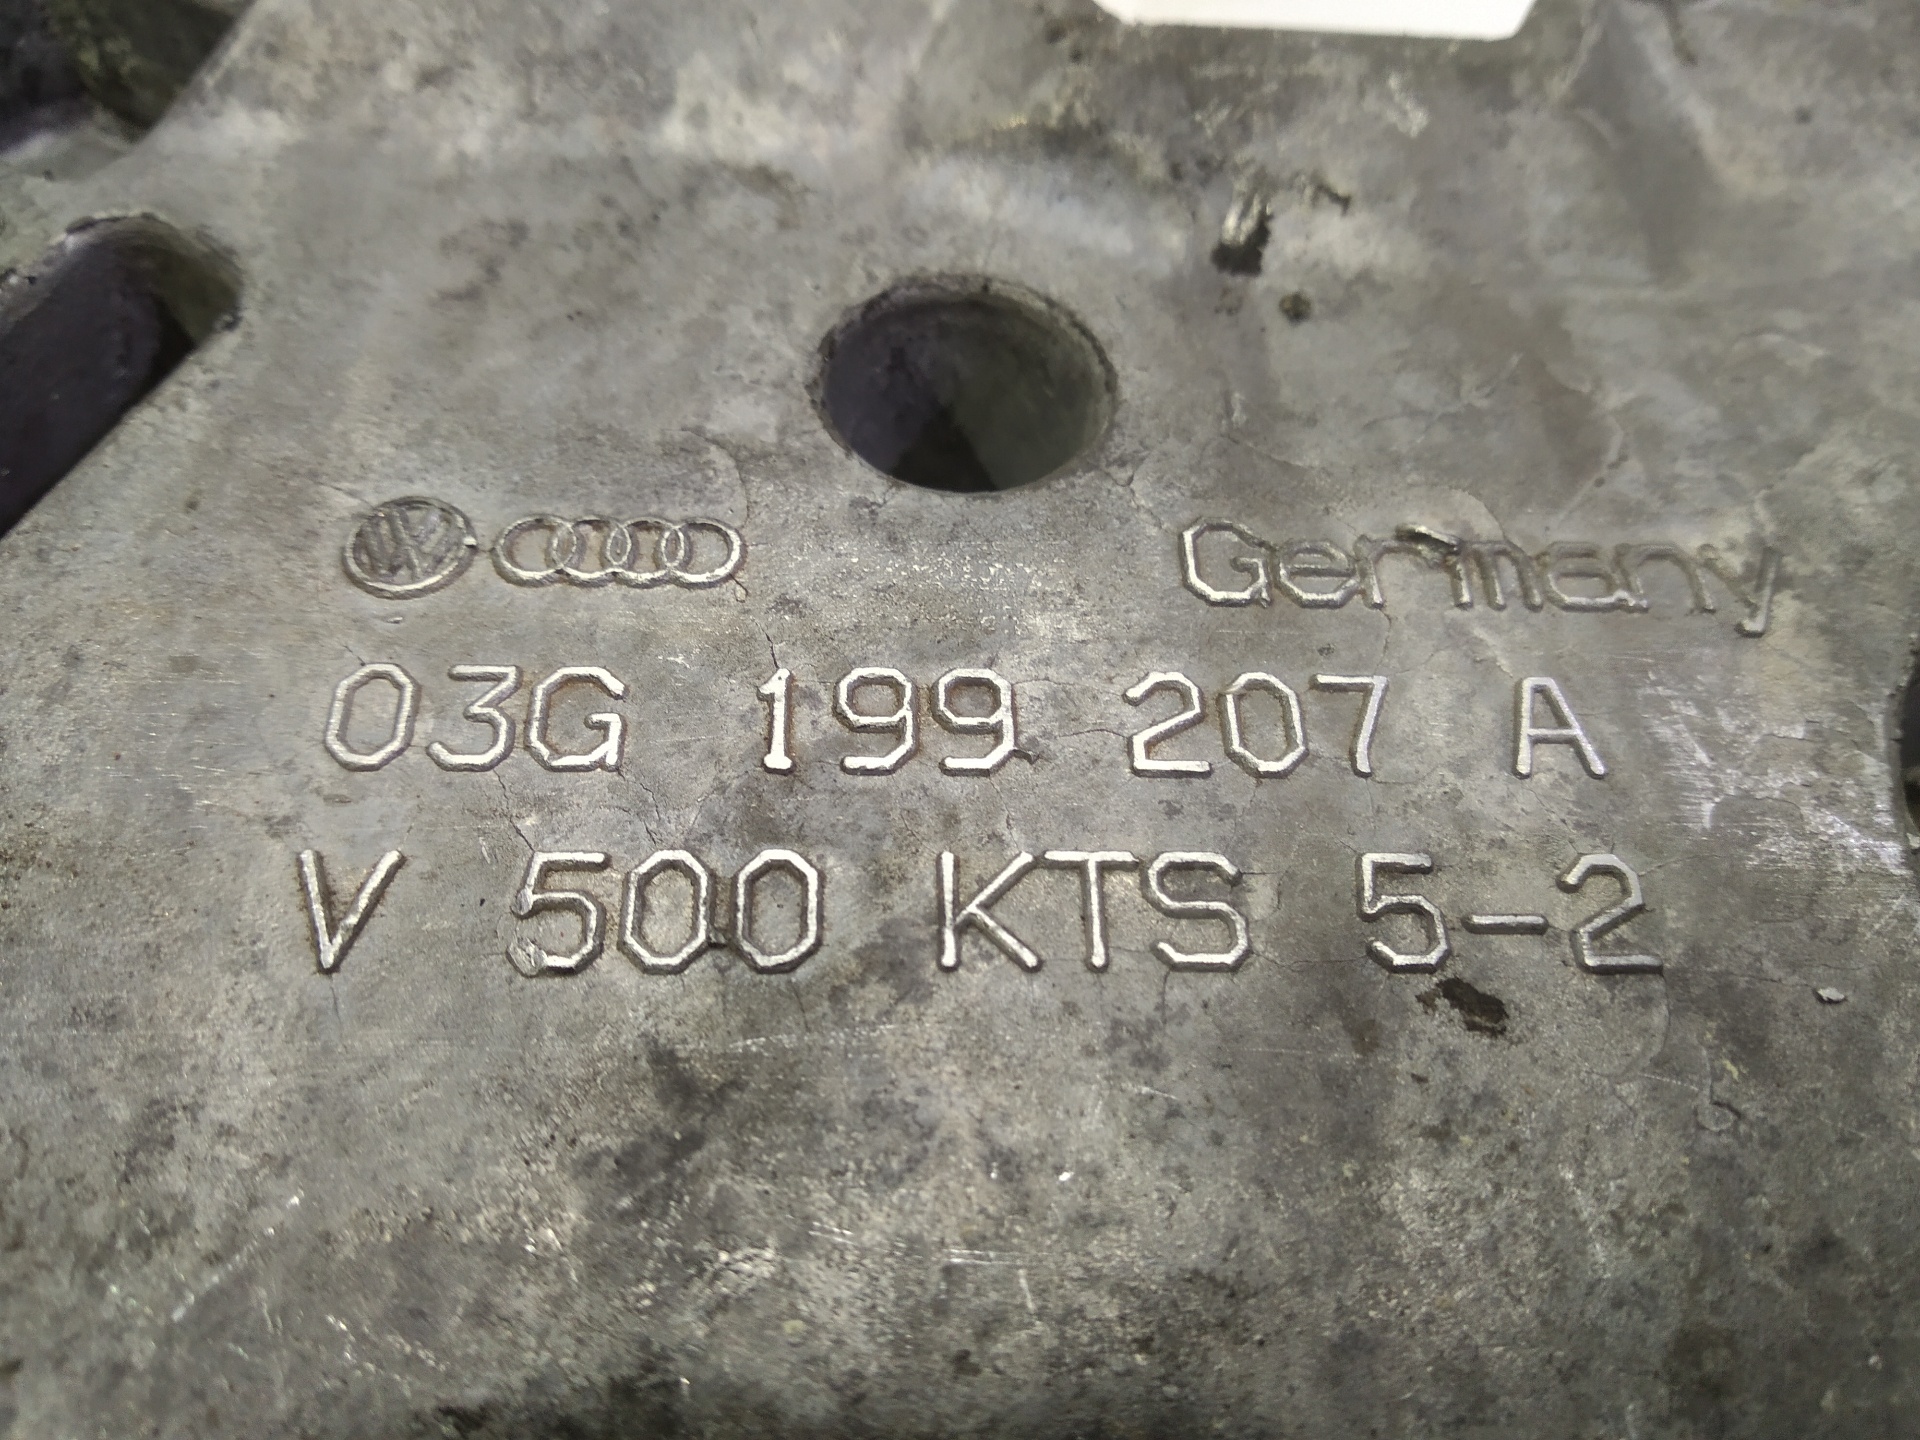 VOLKSWAGEN Passat B6 (2005-2010) Подушка двигателя правая 03G199207A 25300545